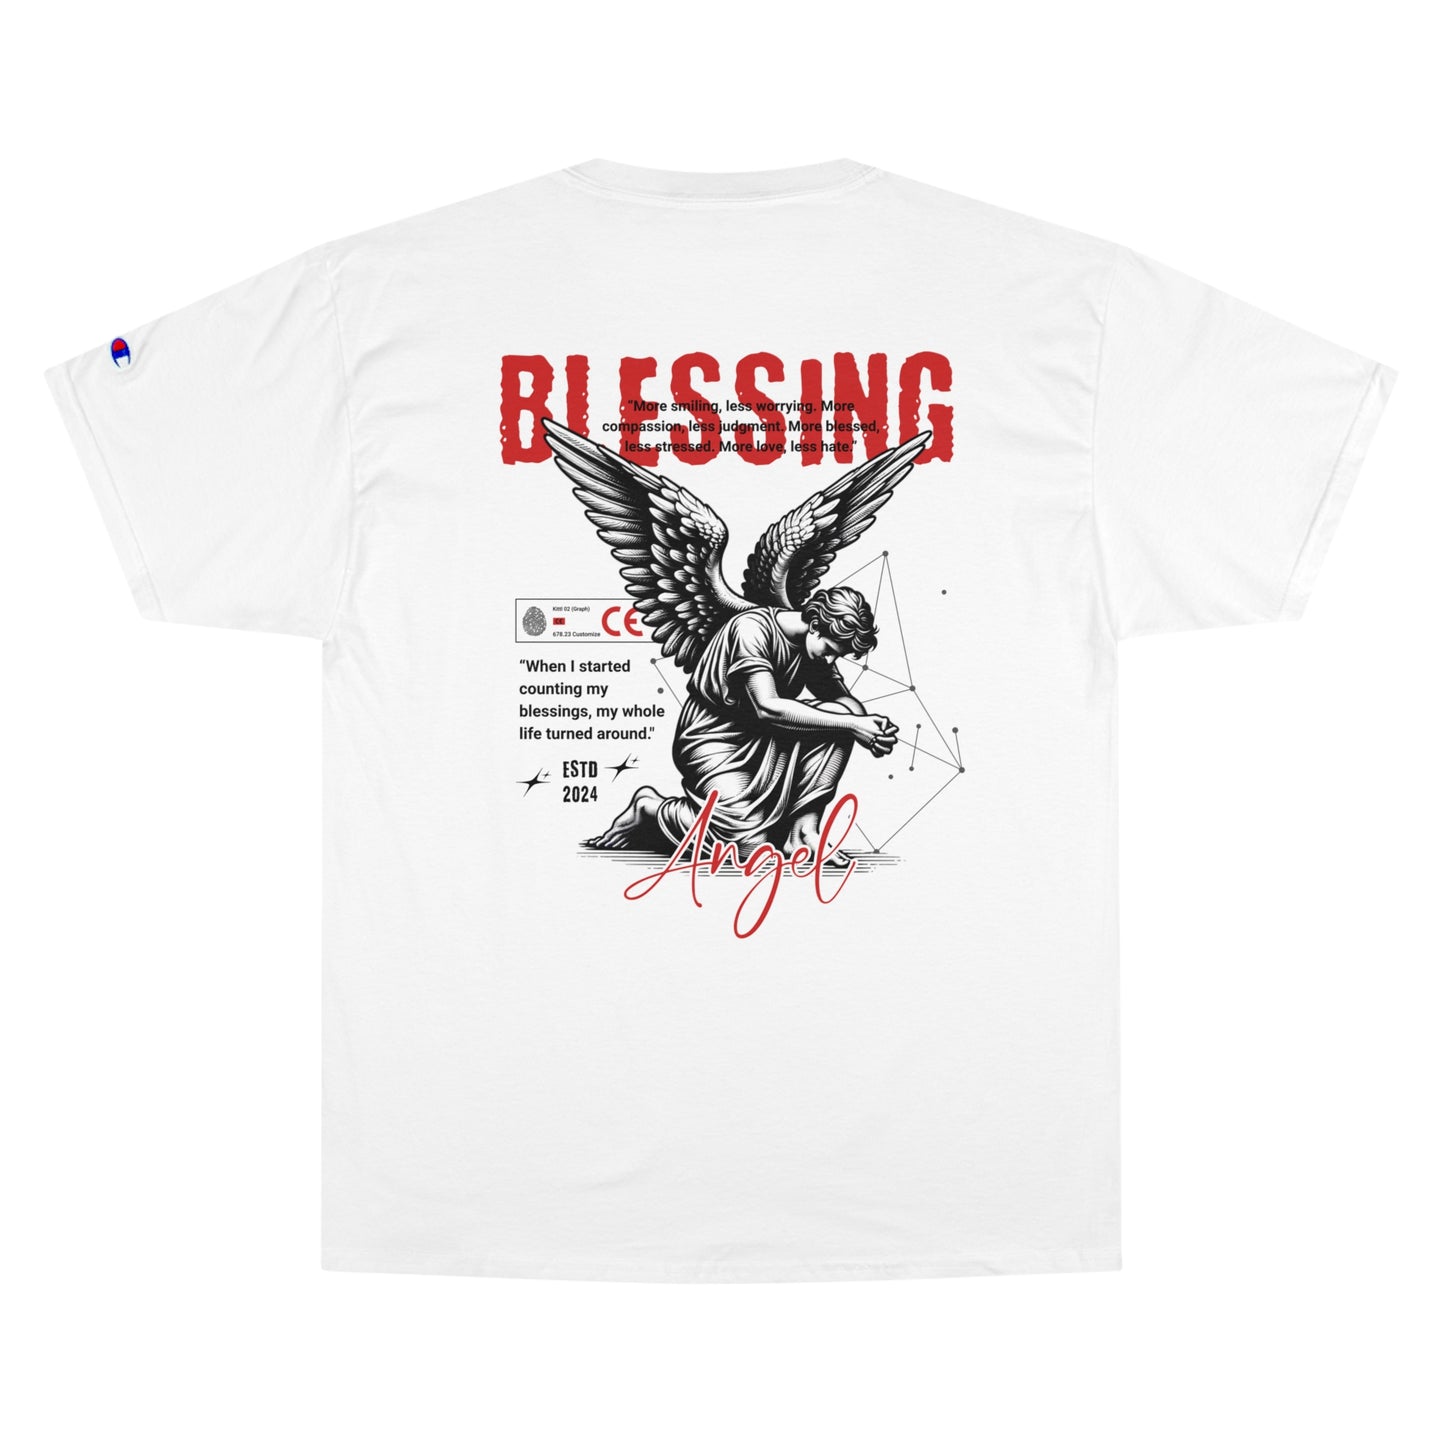 Blessing T-Shirt